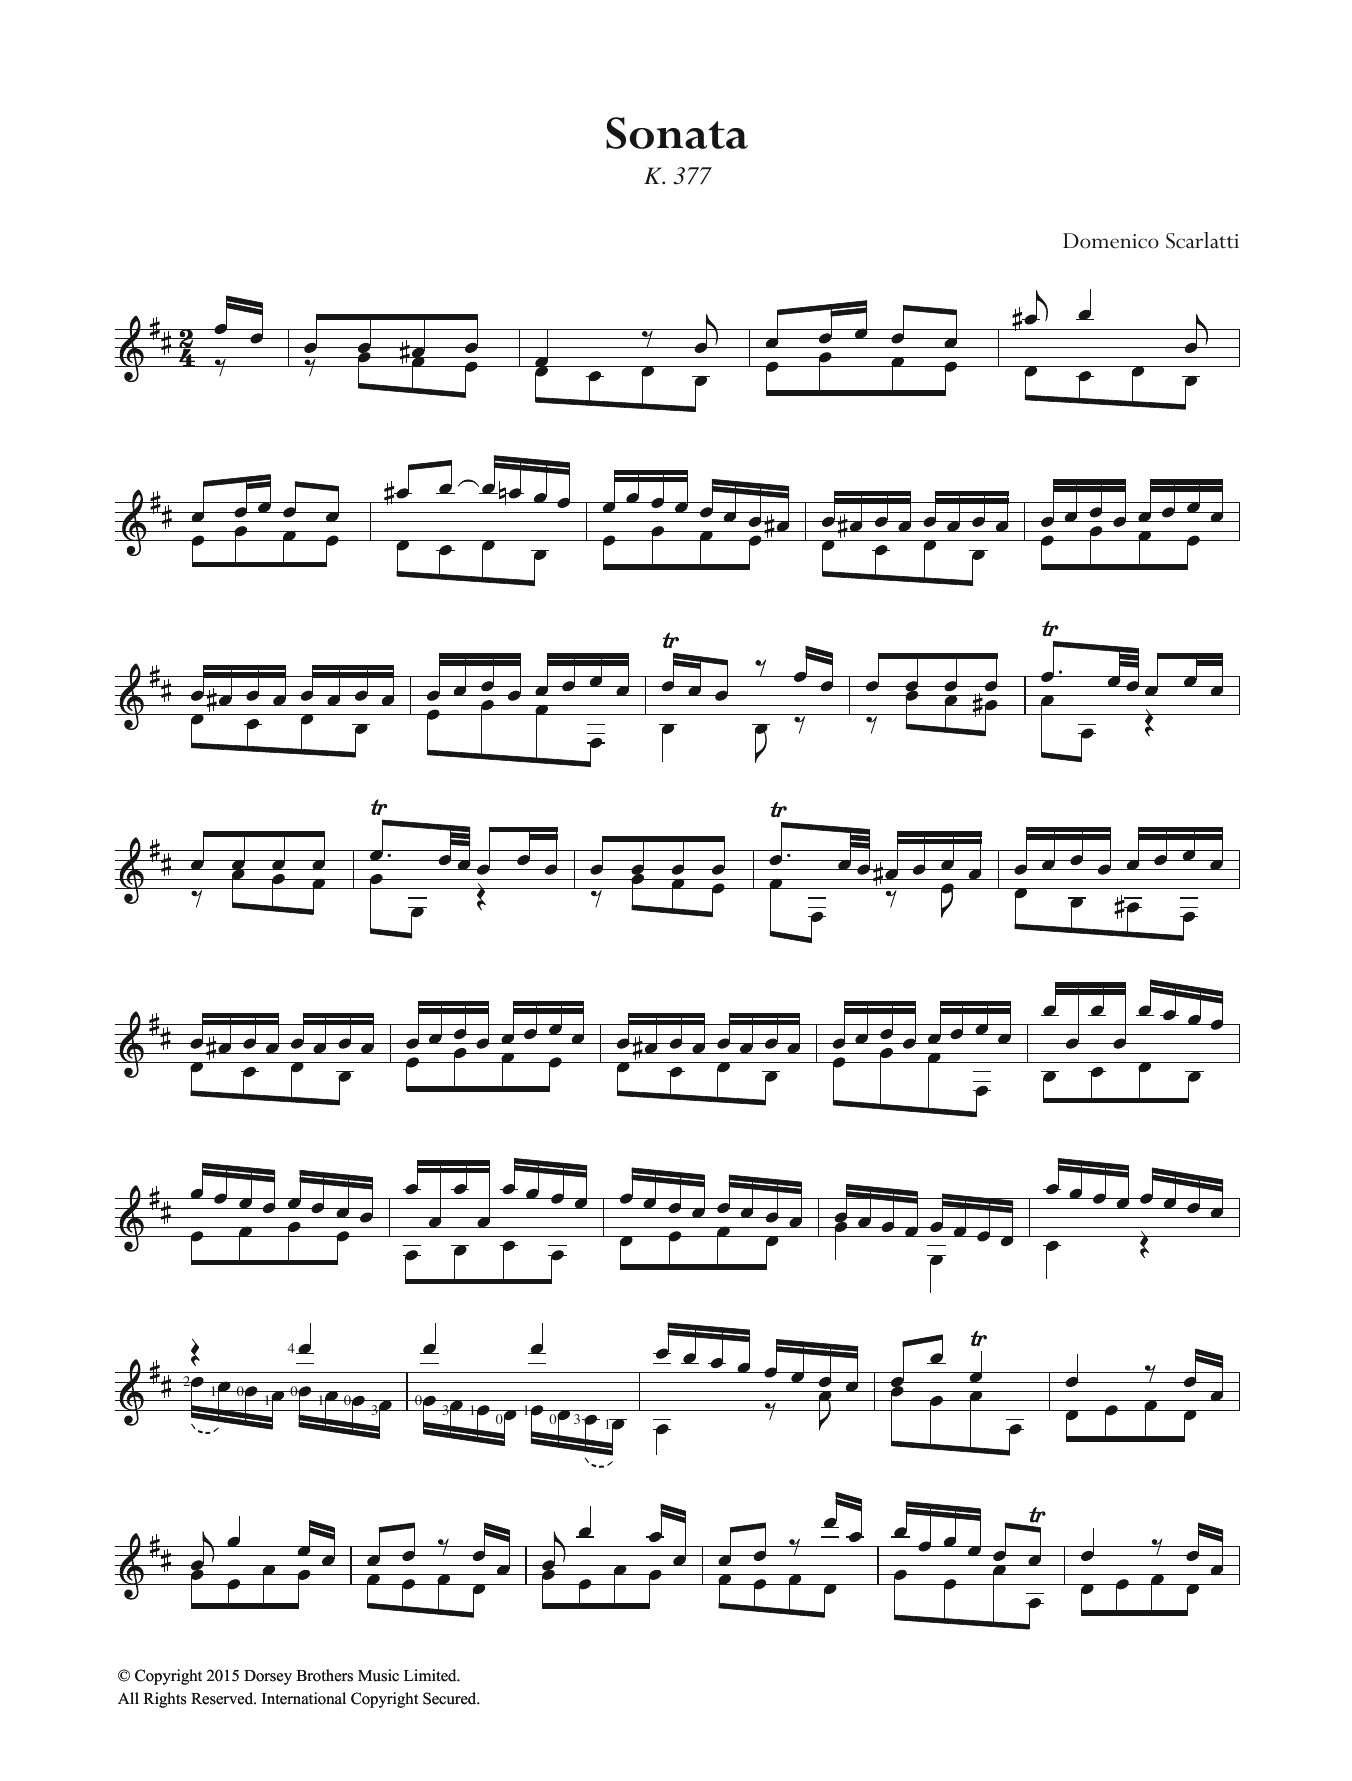 Domenico Scarlatti Sonata K.377 Sheet Music Notes & Chords for Guitar - Download or Print PDF